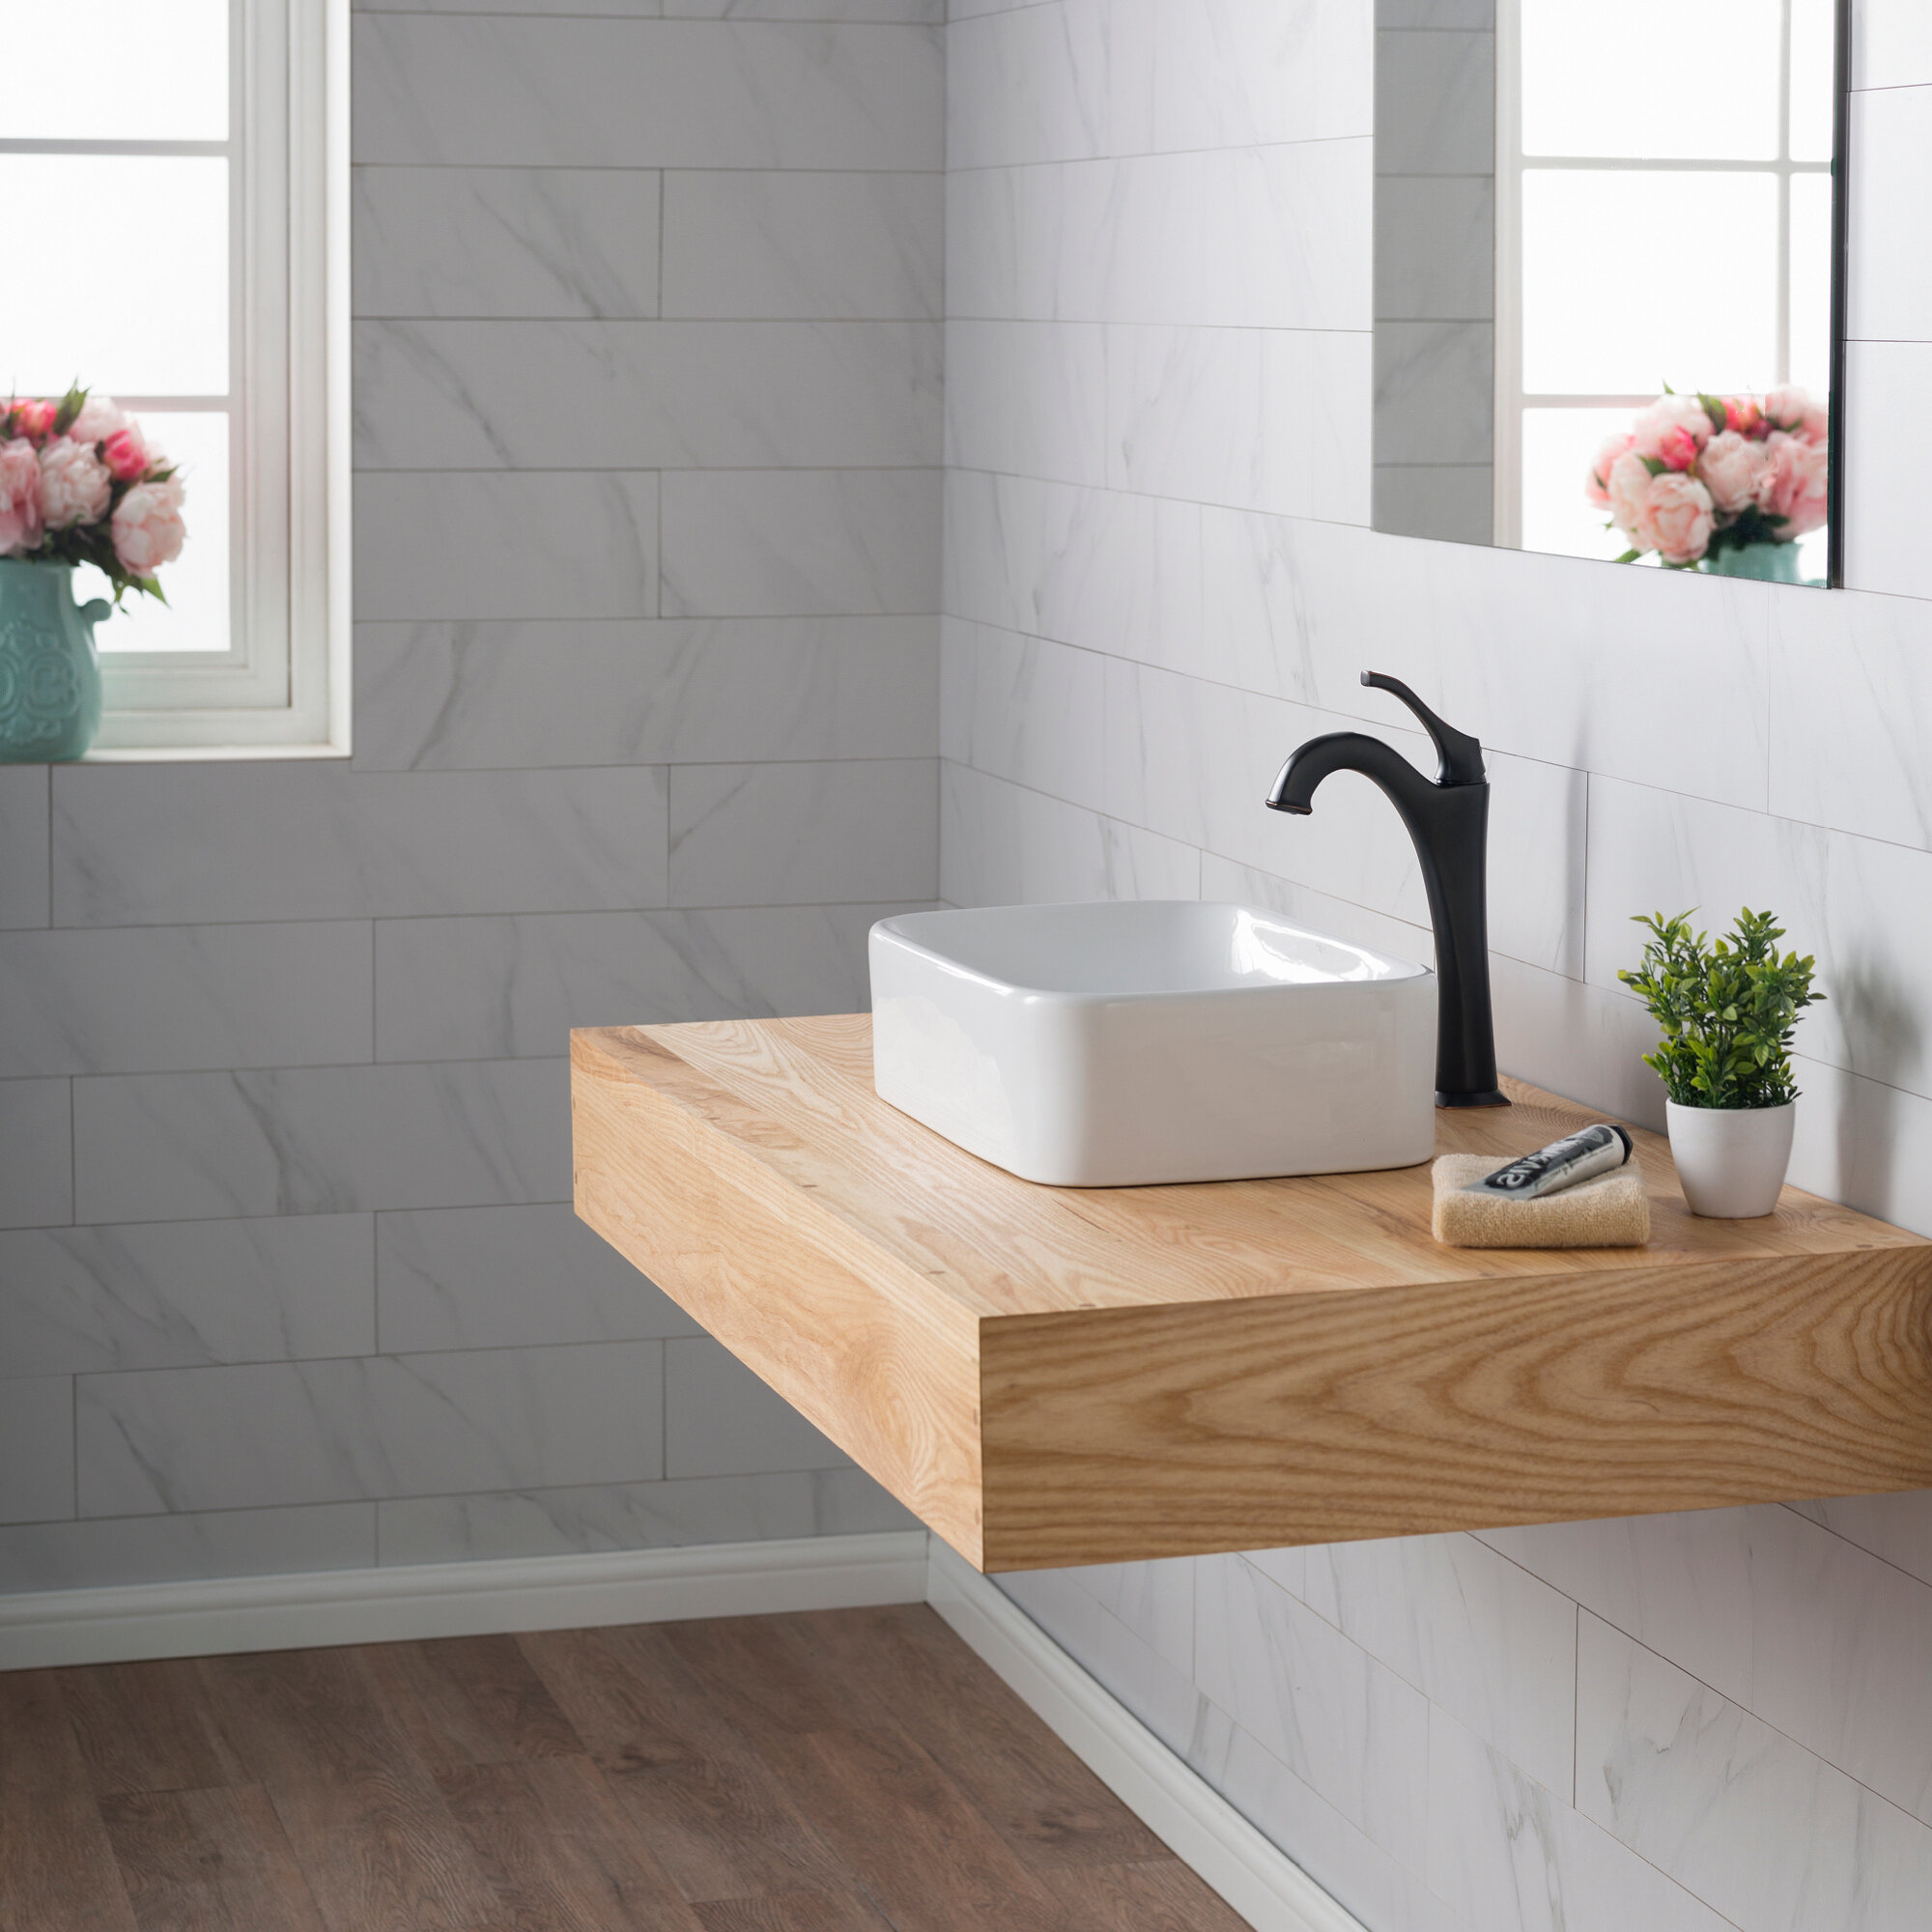 Kraus Elavo Ceramic Rectangular Vessel Bathroom Sink Reviews Wayfair